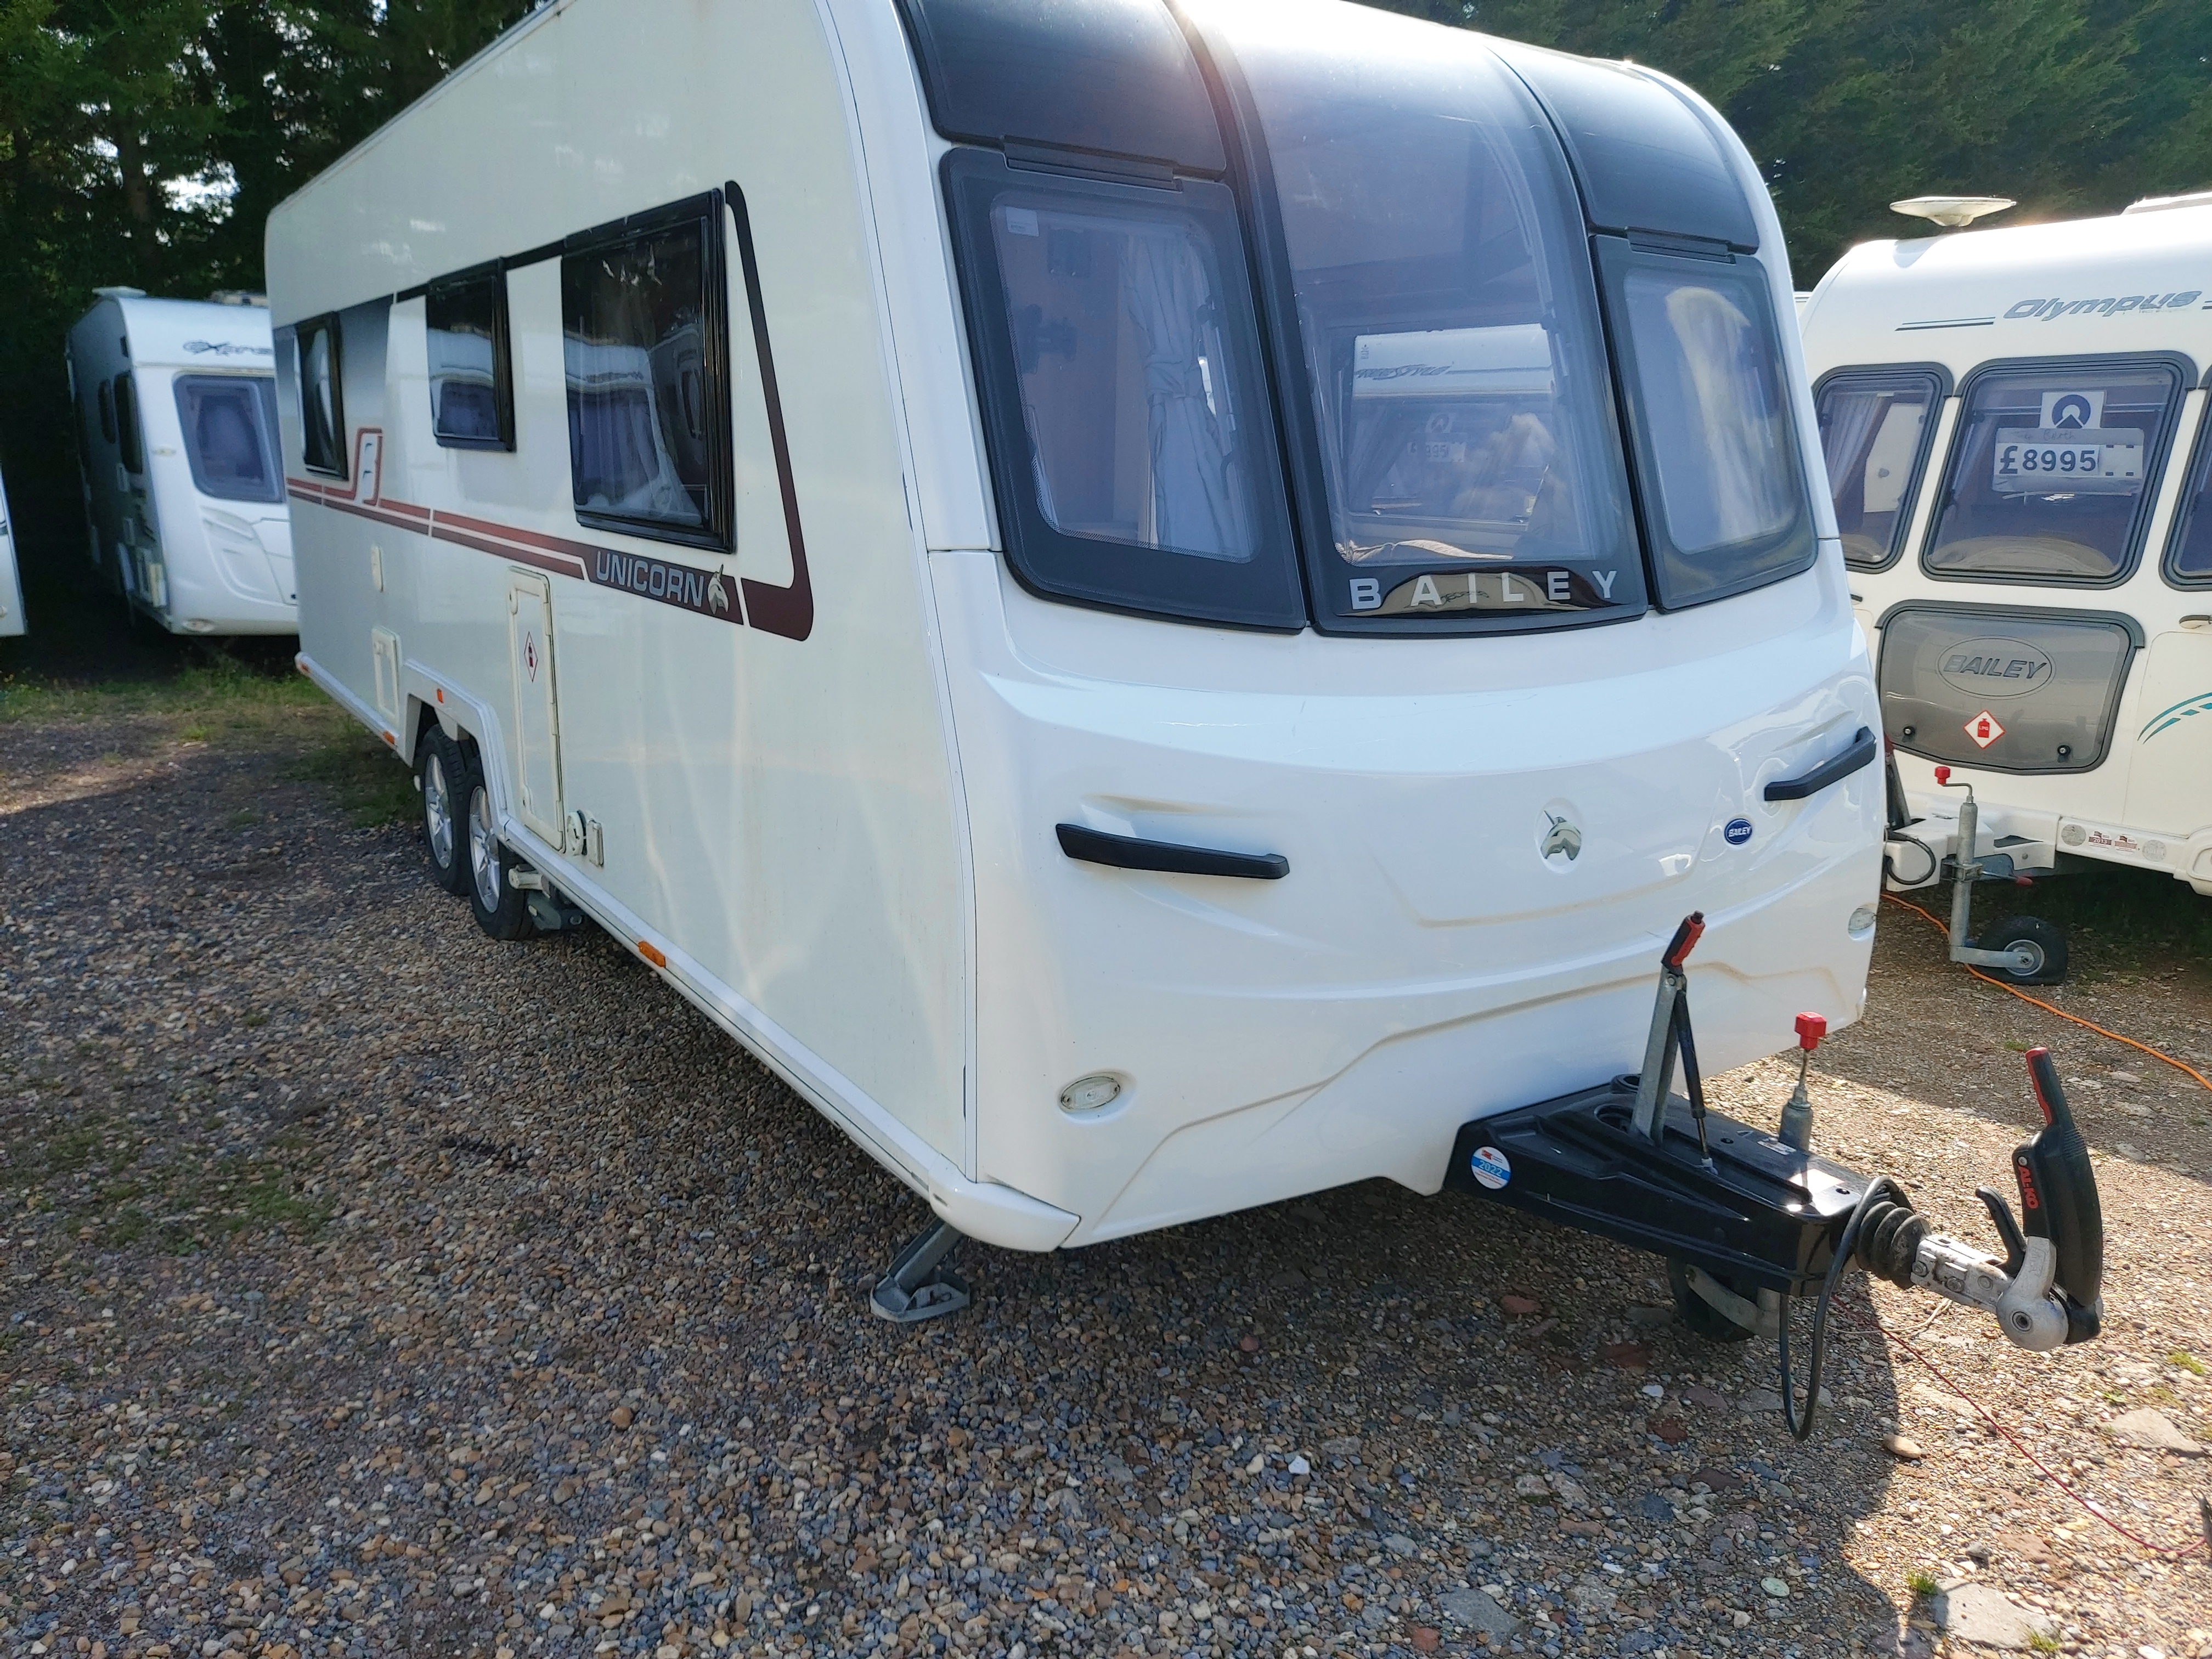 2018 Bailey Unicorn Pamplona Twin Axle Island Bed Caravan, Twin Movers, Solar